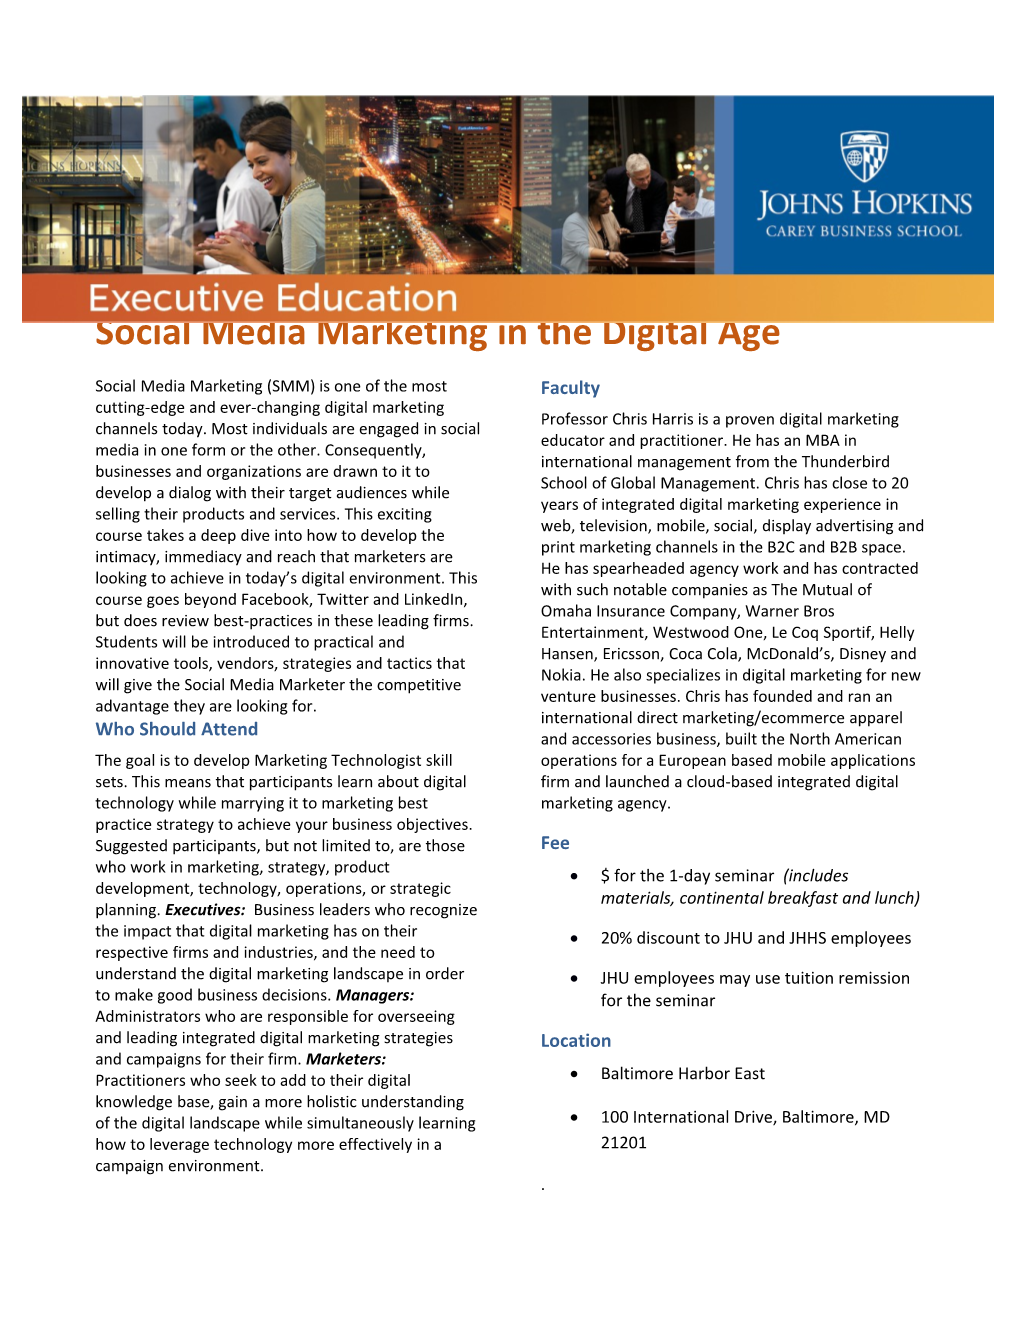 Social Media Marketing in the Digital Age